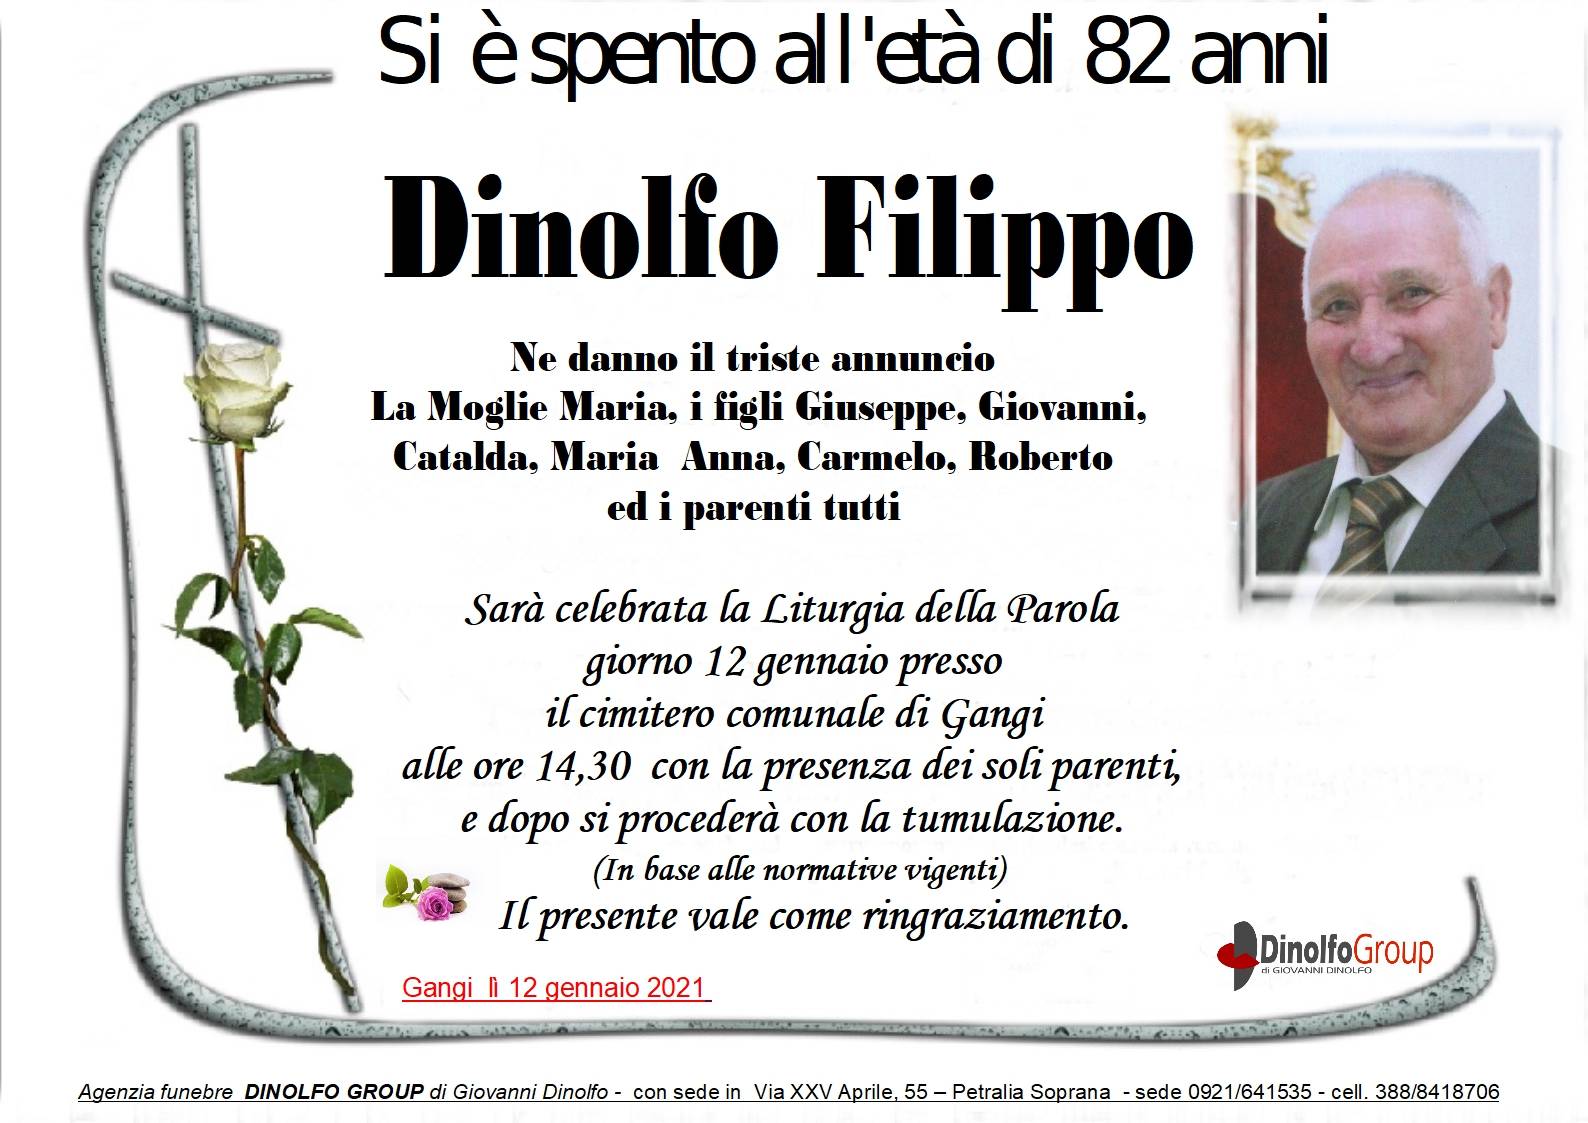 Filippo Dinolfo